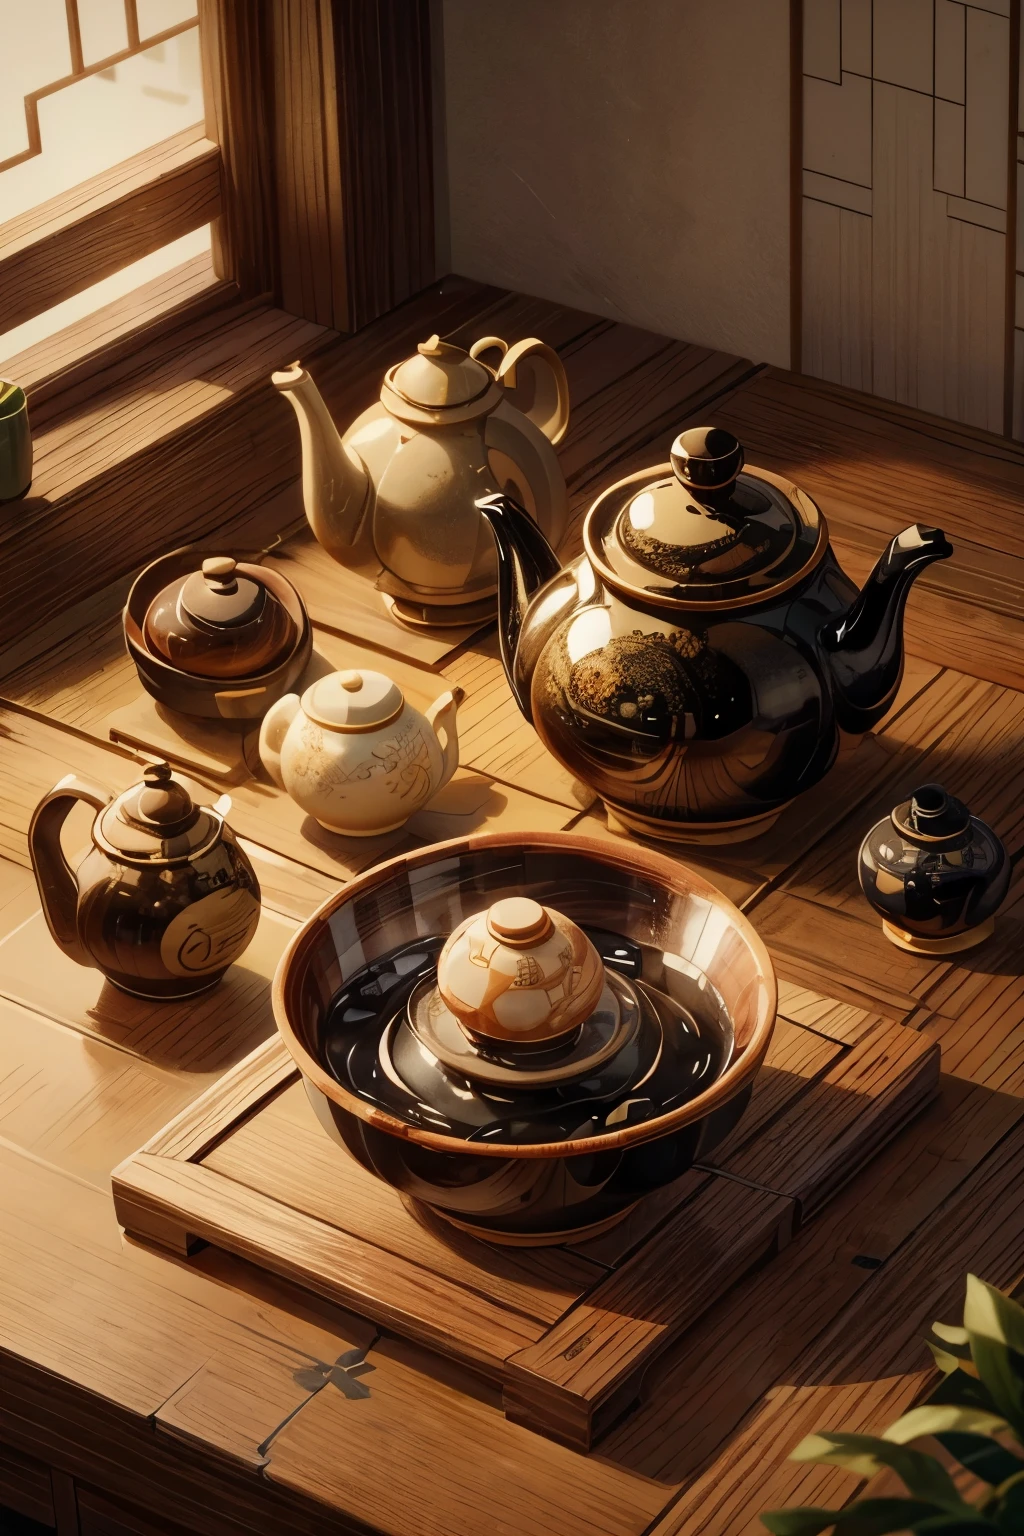 On the bowl is placed a กาน้ำชา, แรงบันดาลใจจาก Sesshū Tōyō, กาต้มน้ำ, large black กาต้มน้ำ on the hearth, กาน้ำชา, กาน้ำชา, กาน้ำชา, ชุดน้ำชาลายครามที่งดงาม, กาน้ำชา: 1, แรงบันดาลใจจาก Renzheng Doben, แรงบันดาลใจจากจักรพรรดิ Xuande, เซรามิกส์, smooth glazed เซรามิกส์